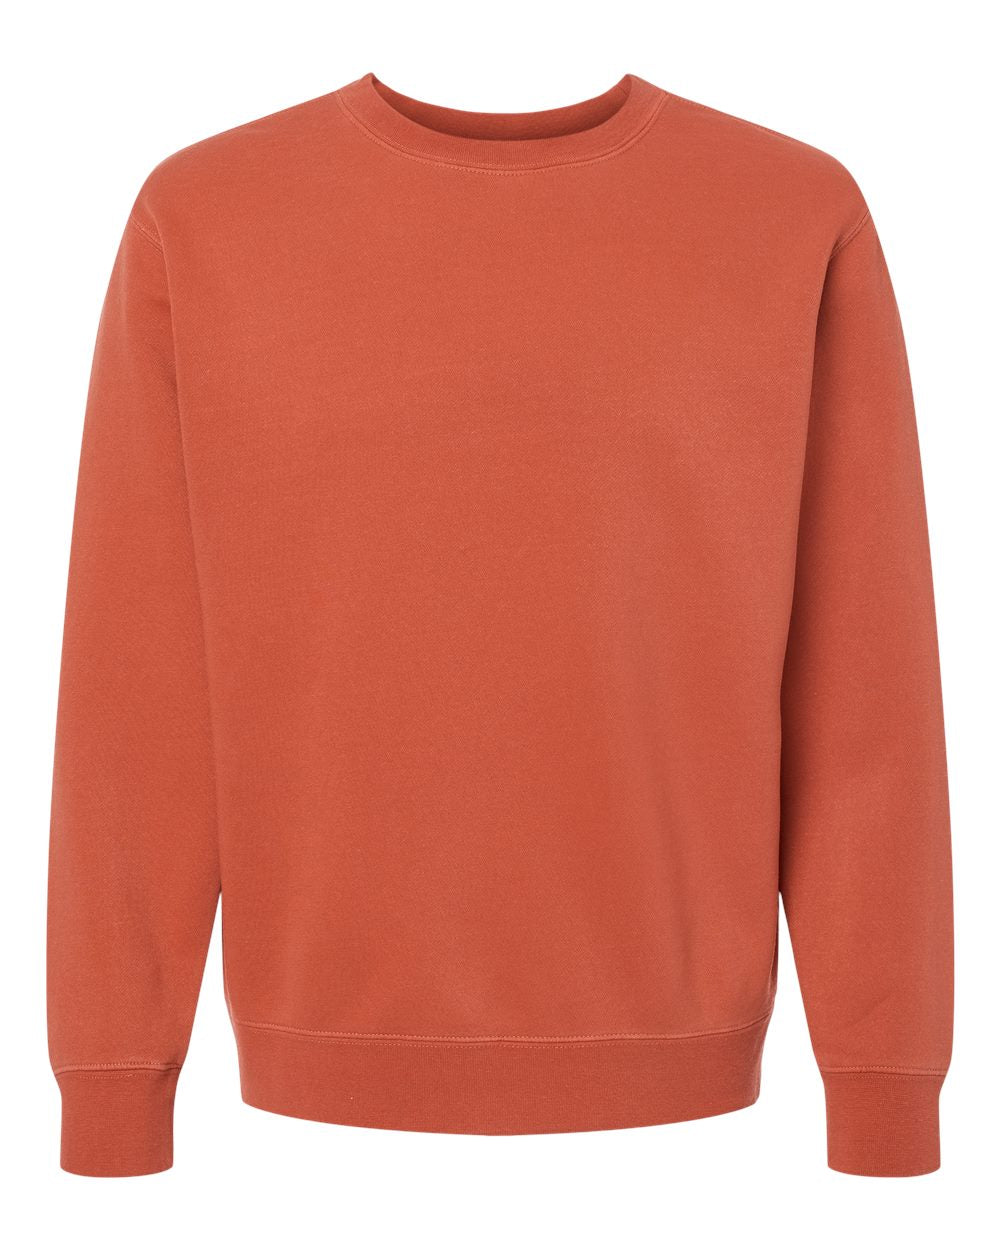 Independent Pigment-Dyed Crewneck Sweatshirt (PRM3500) in Pigment Amber